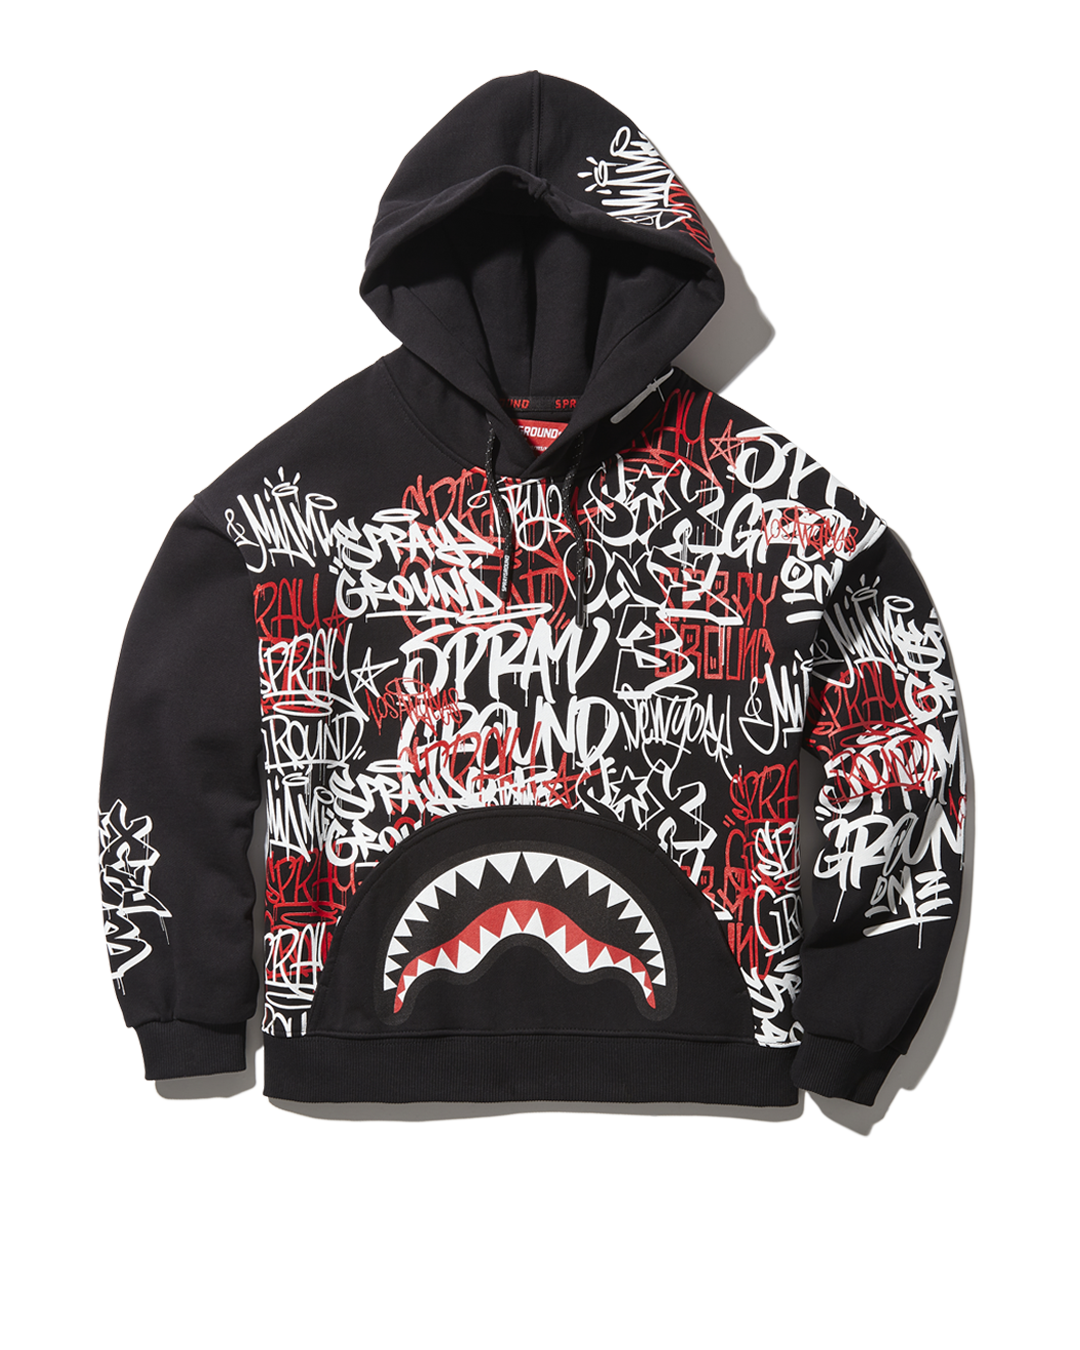 Astro-logo camouflage-print hoodie